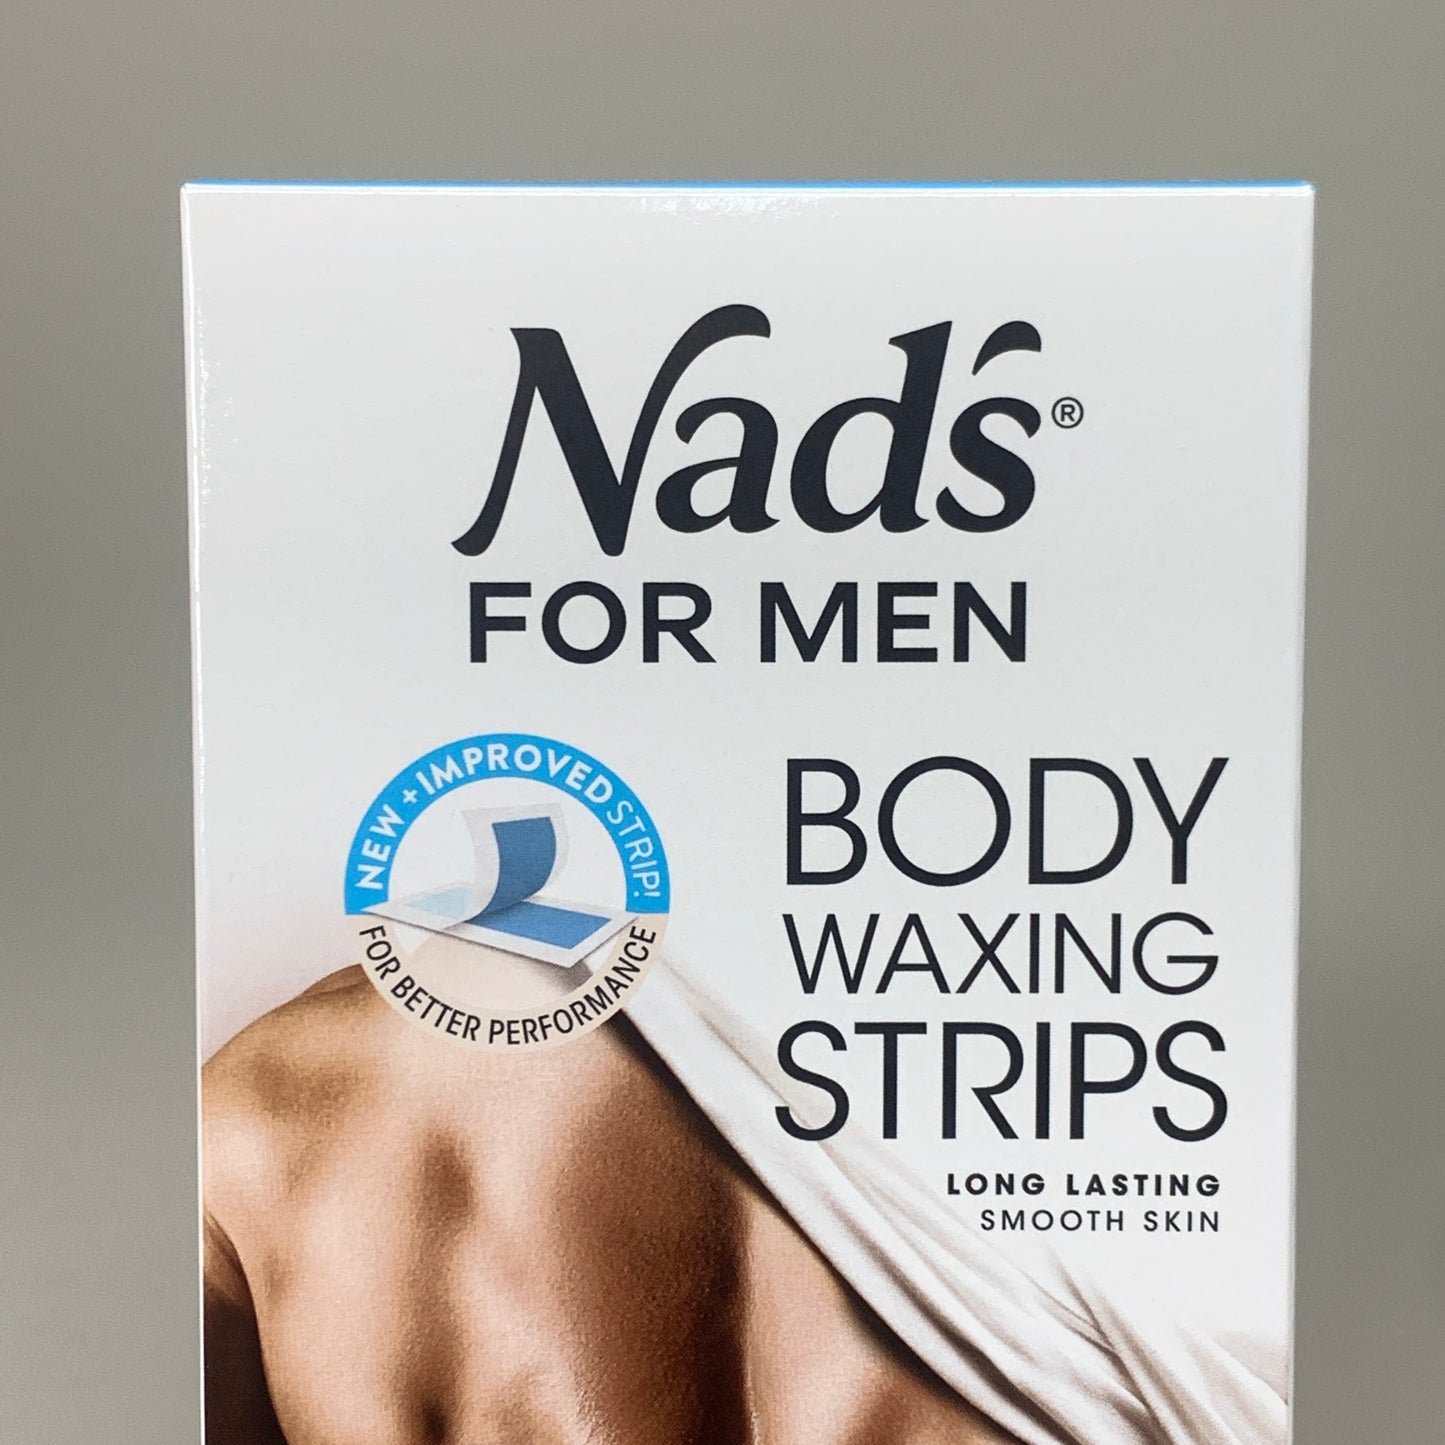 NADS 2 PK Mens Body Wax Strips for Course Male Hair 3494EN06